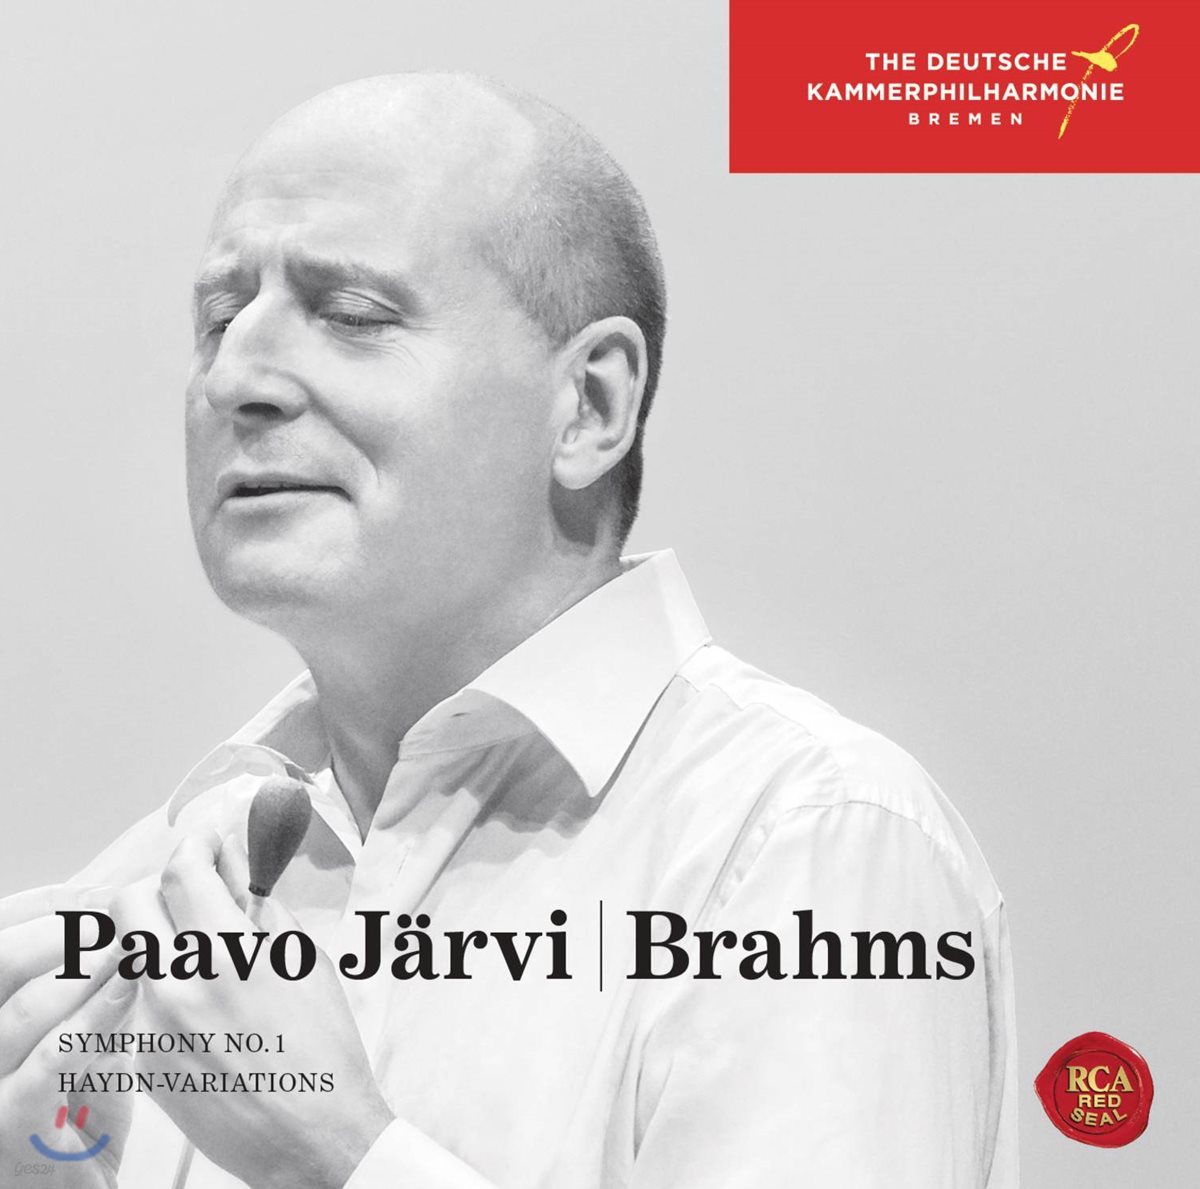 Paavo Jarvi 브람스: 교향곡 1번, 하이든 주제에 의한 변주곡 (Brahms: Symphony No.1, Haydn Variations)